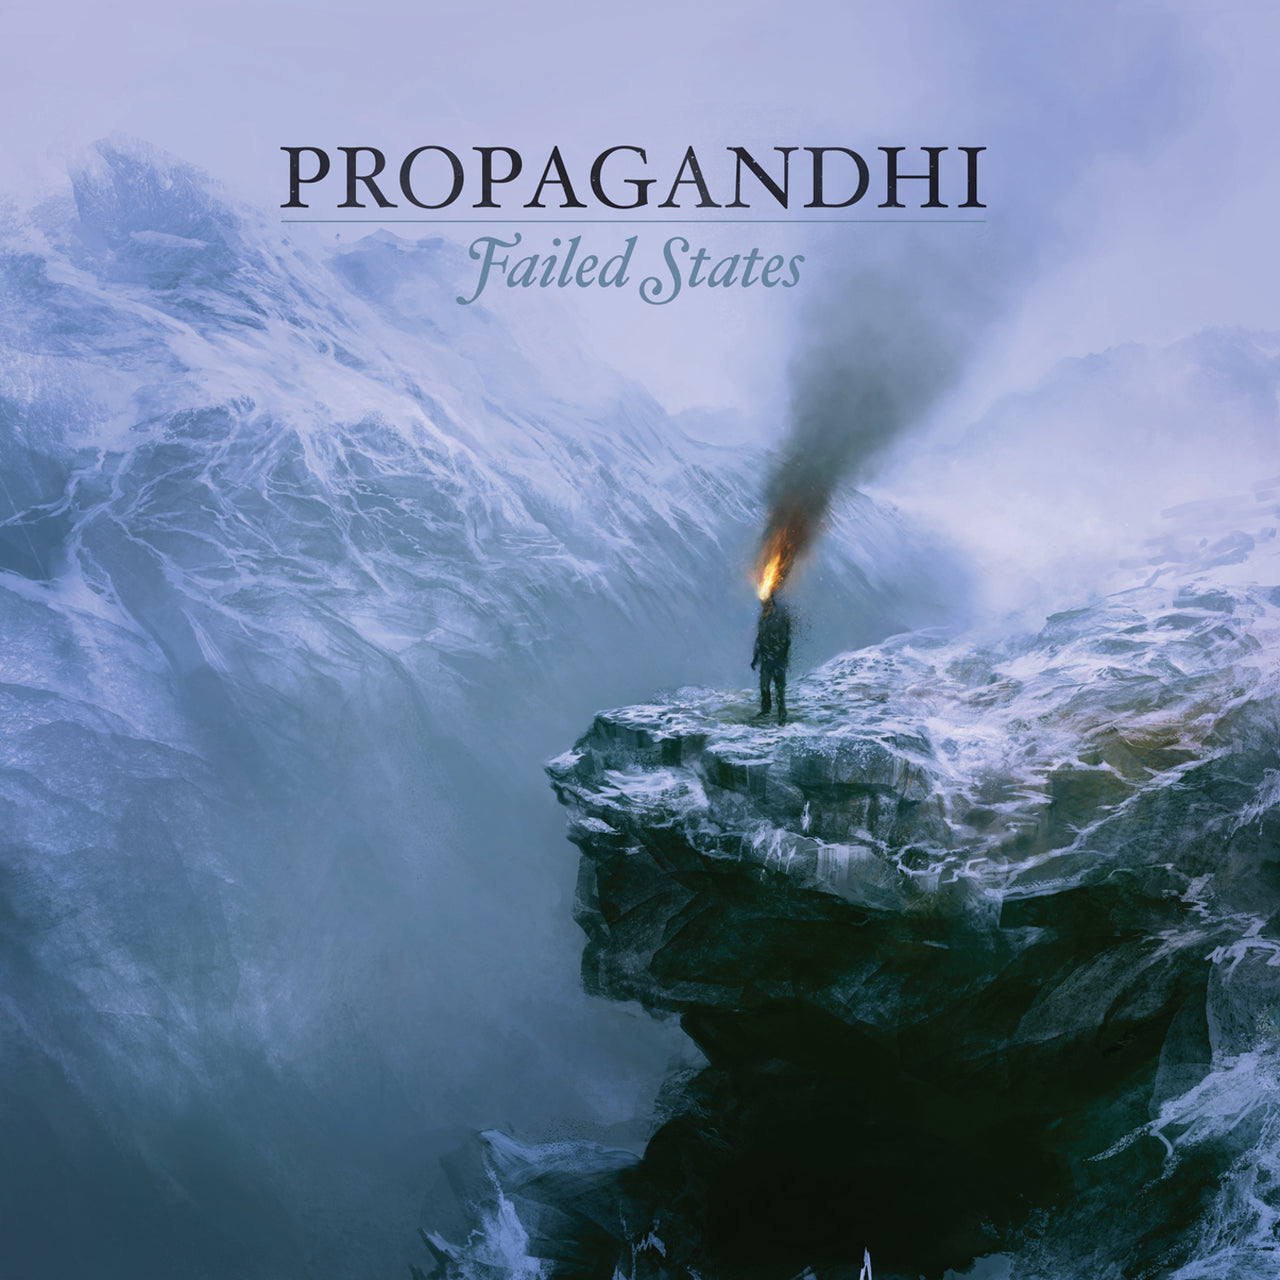 Propagandhi "Failed States" 12" Vinyl